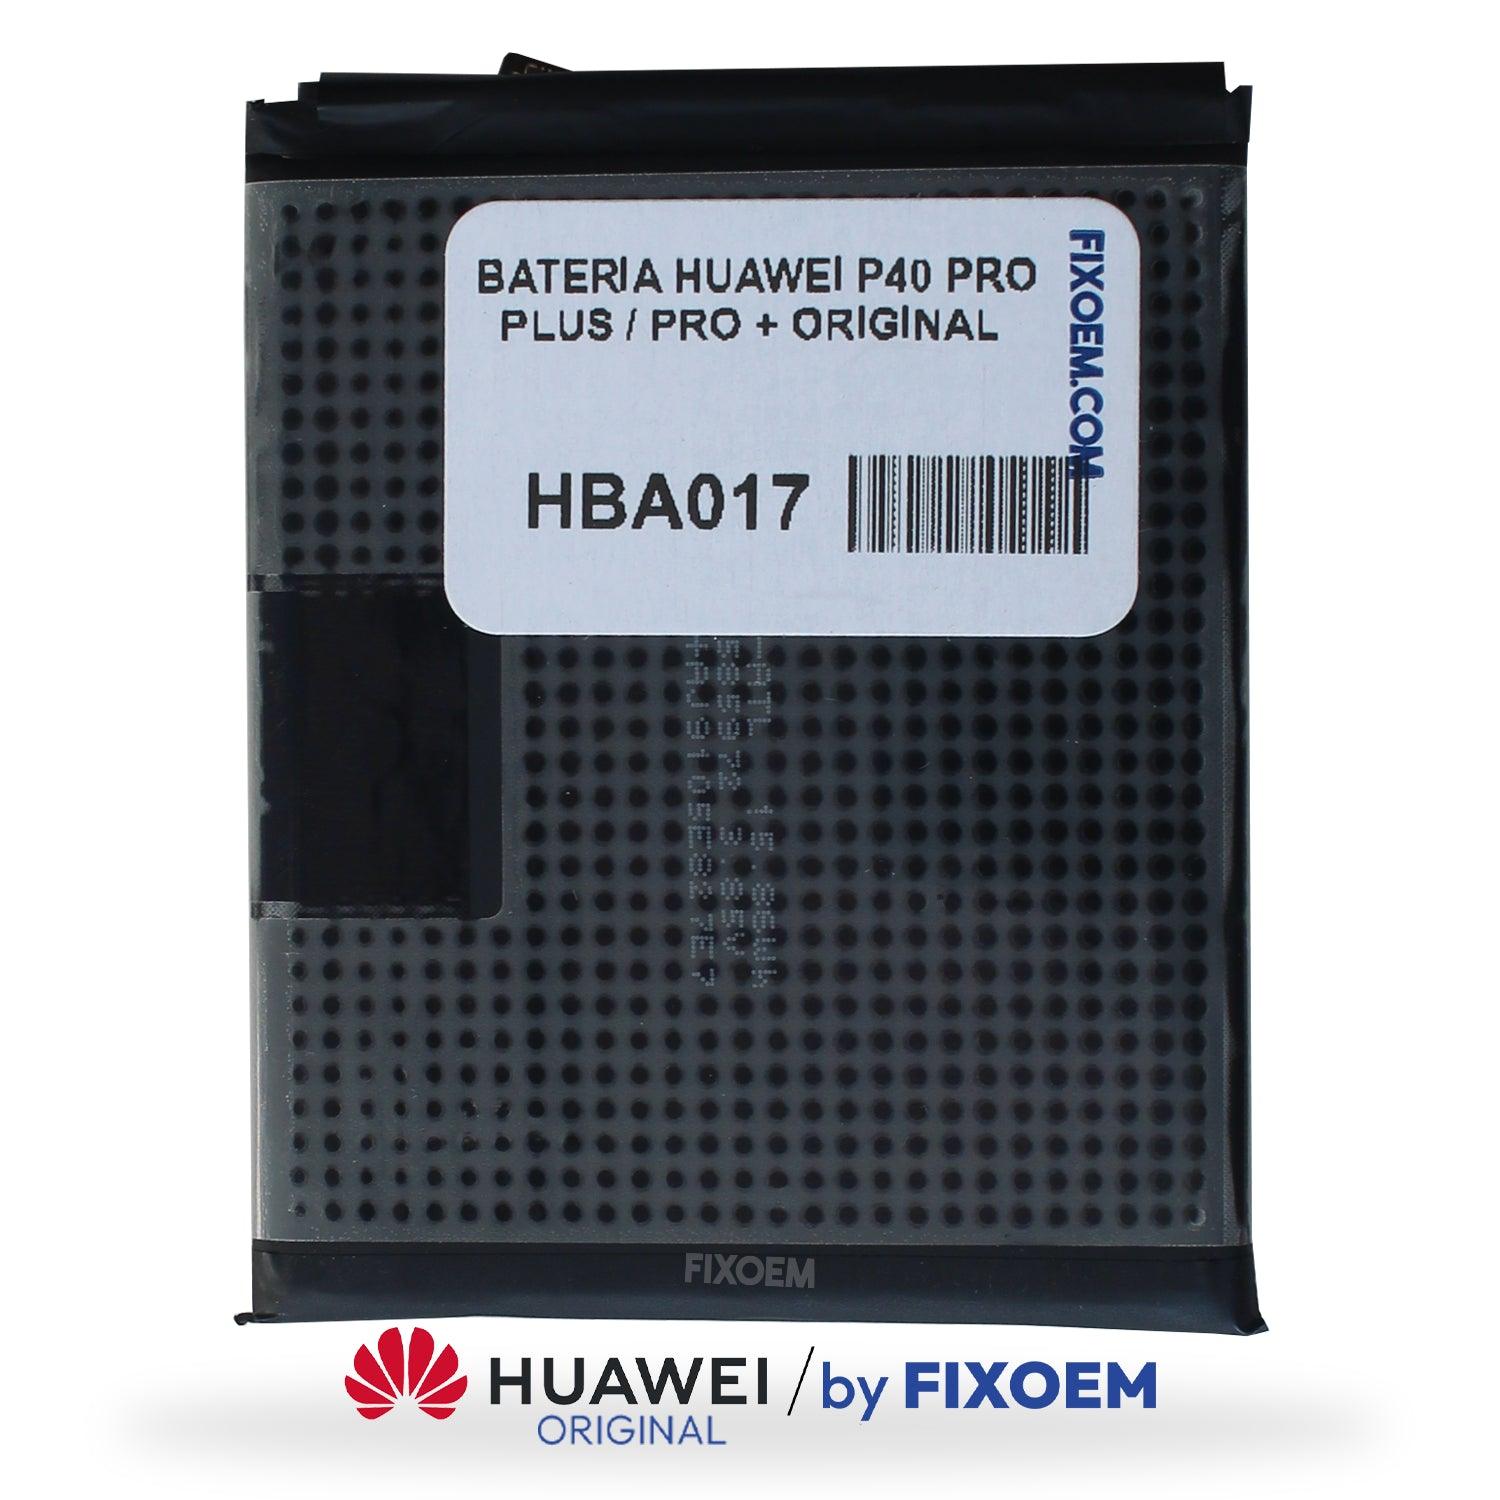 Bateria Huawei Original HB595074EEW P40 Pro Plus / Pro + |+2,000 reseñas 4.8/5 ⭐